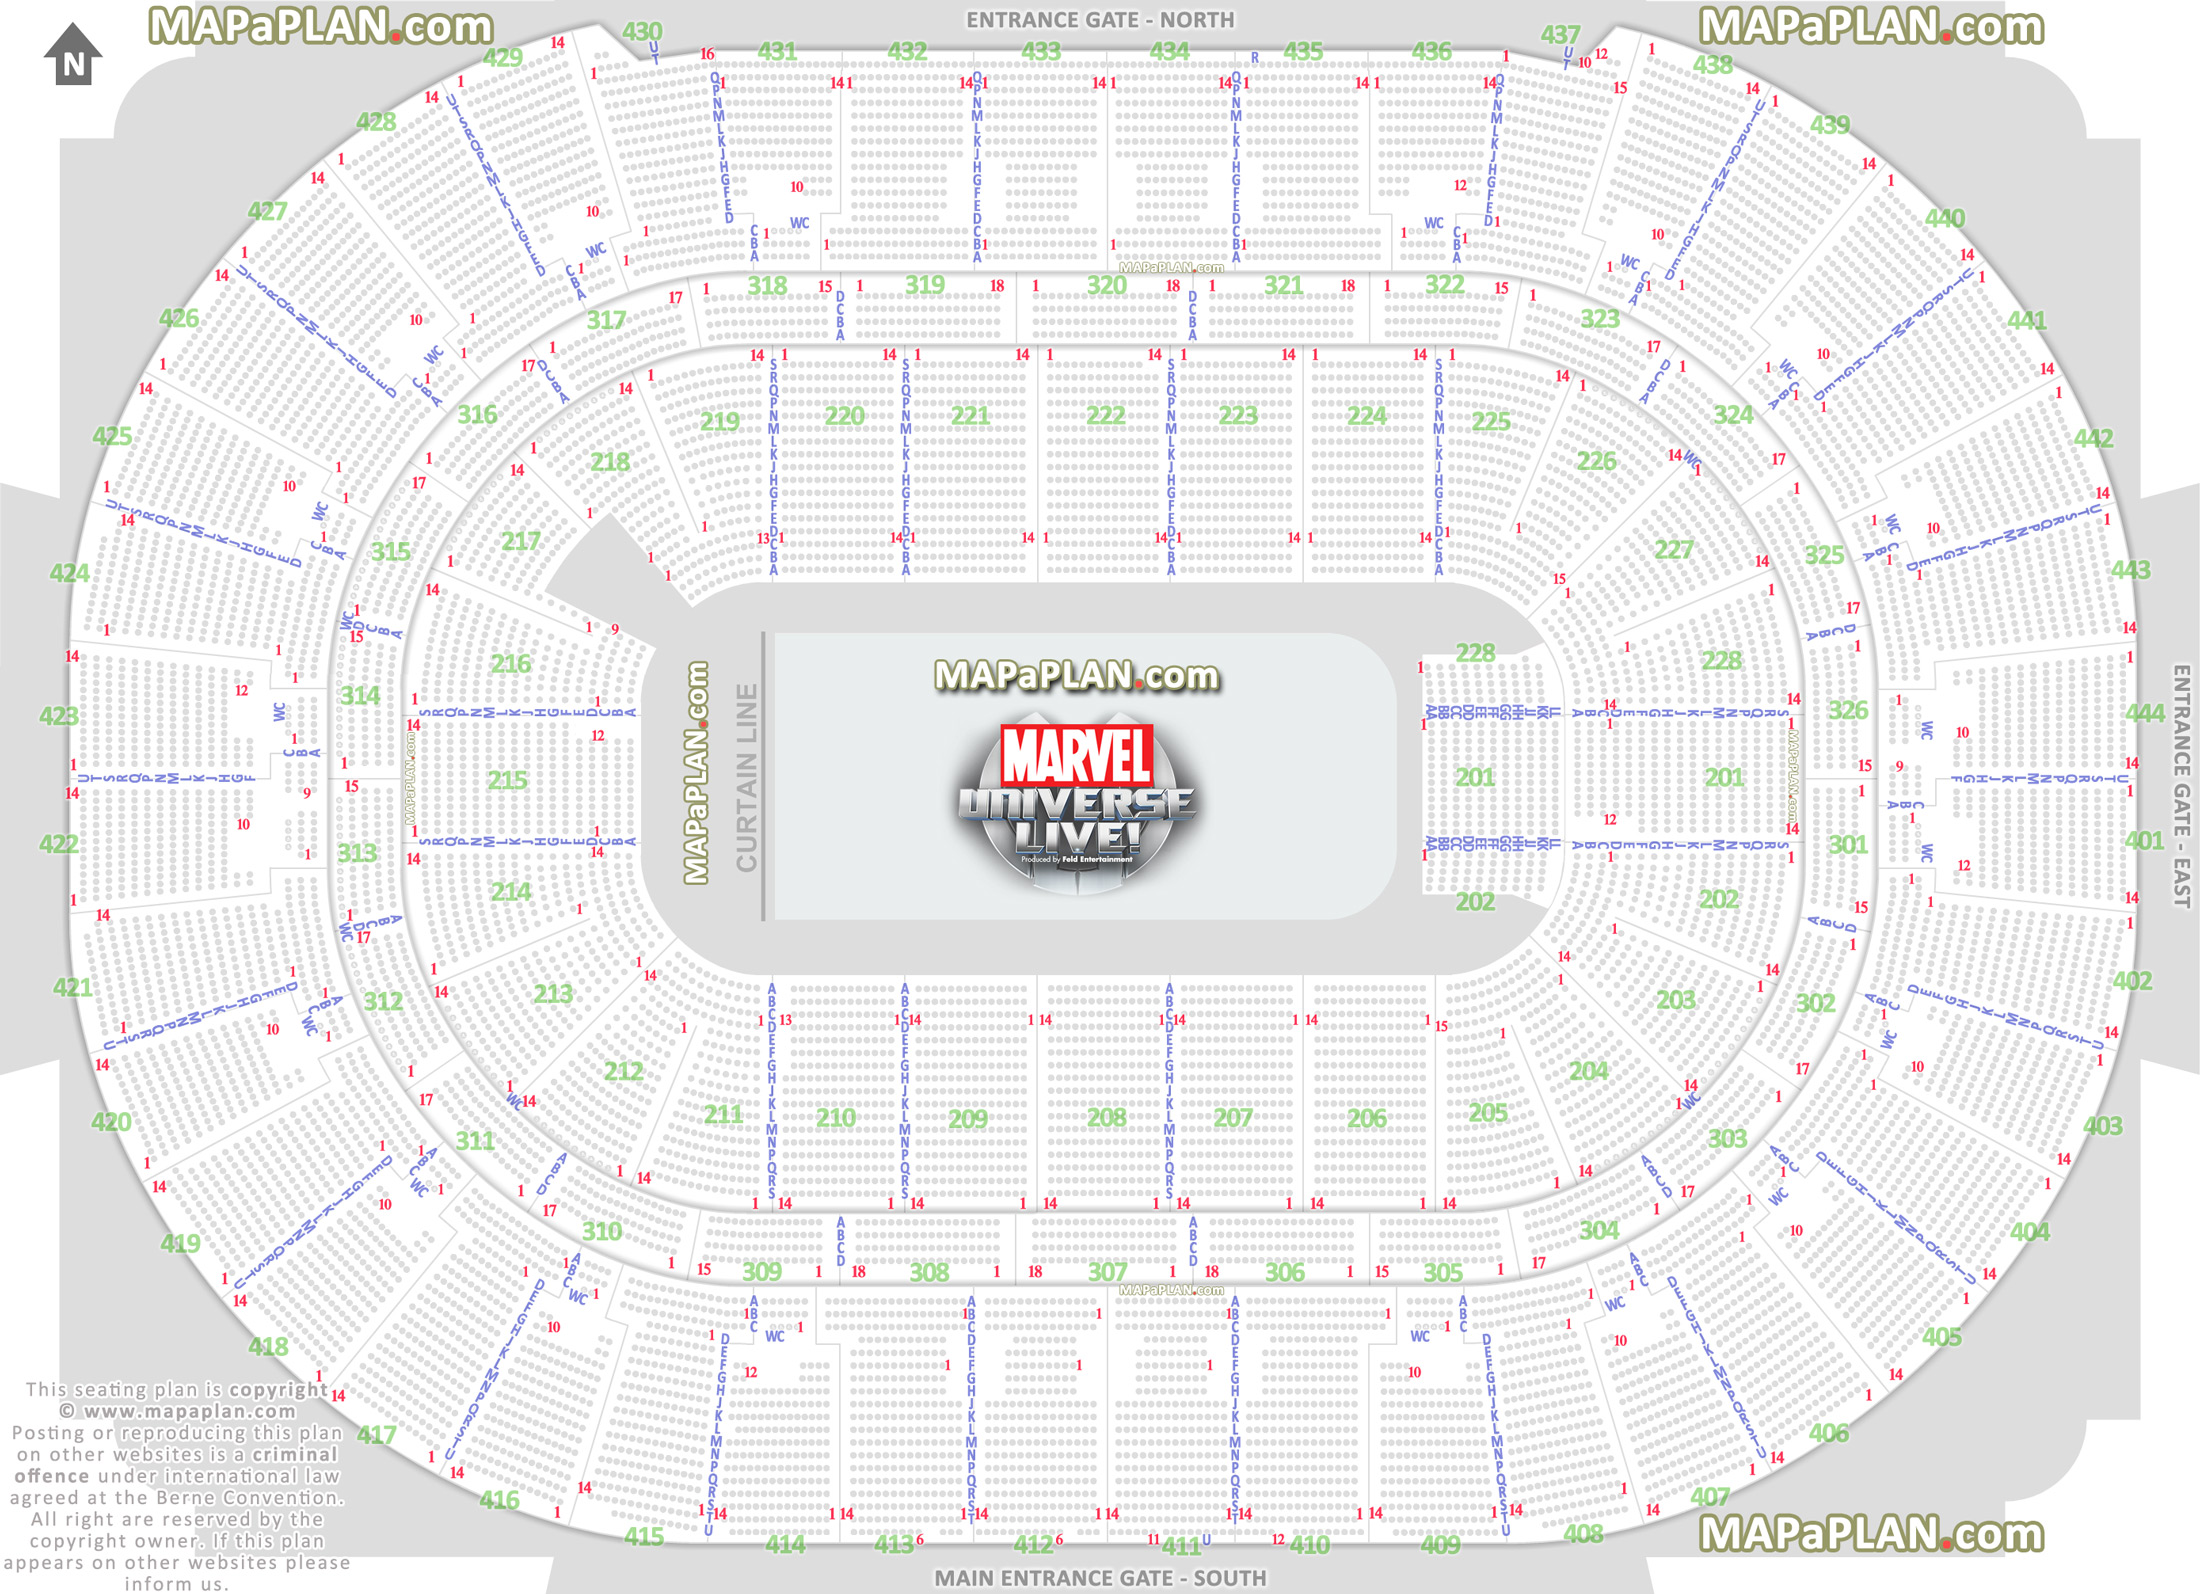 Honda Arena Anaheim Seating Chart